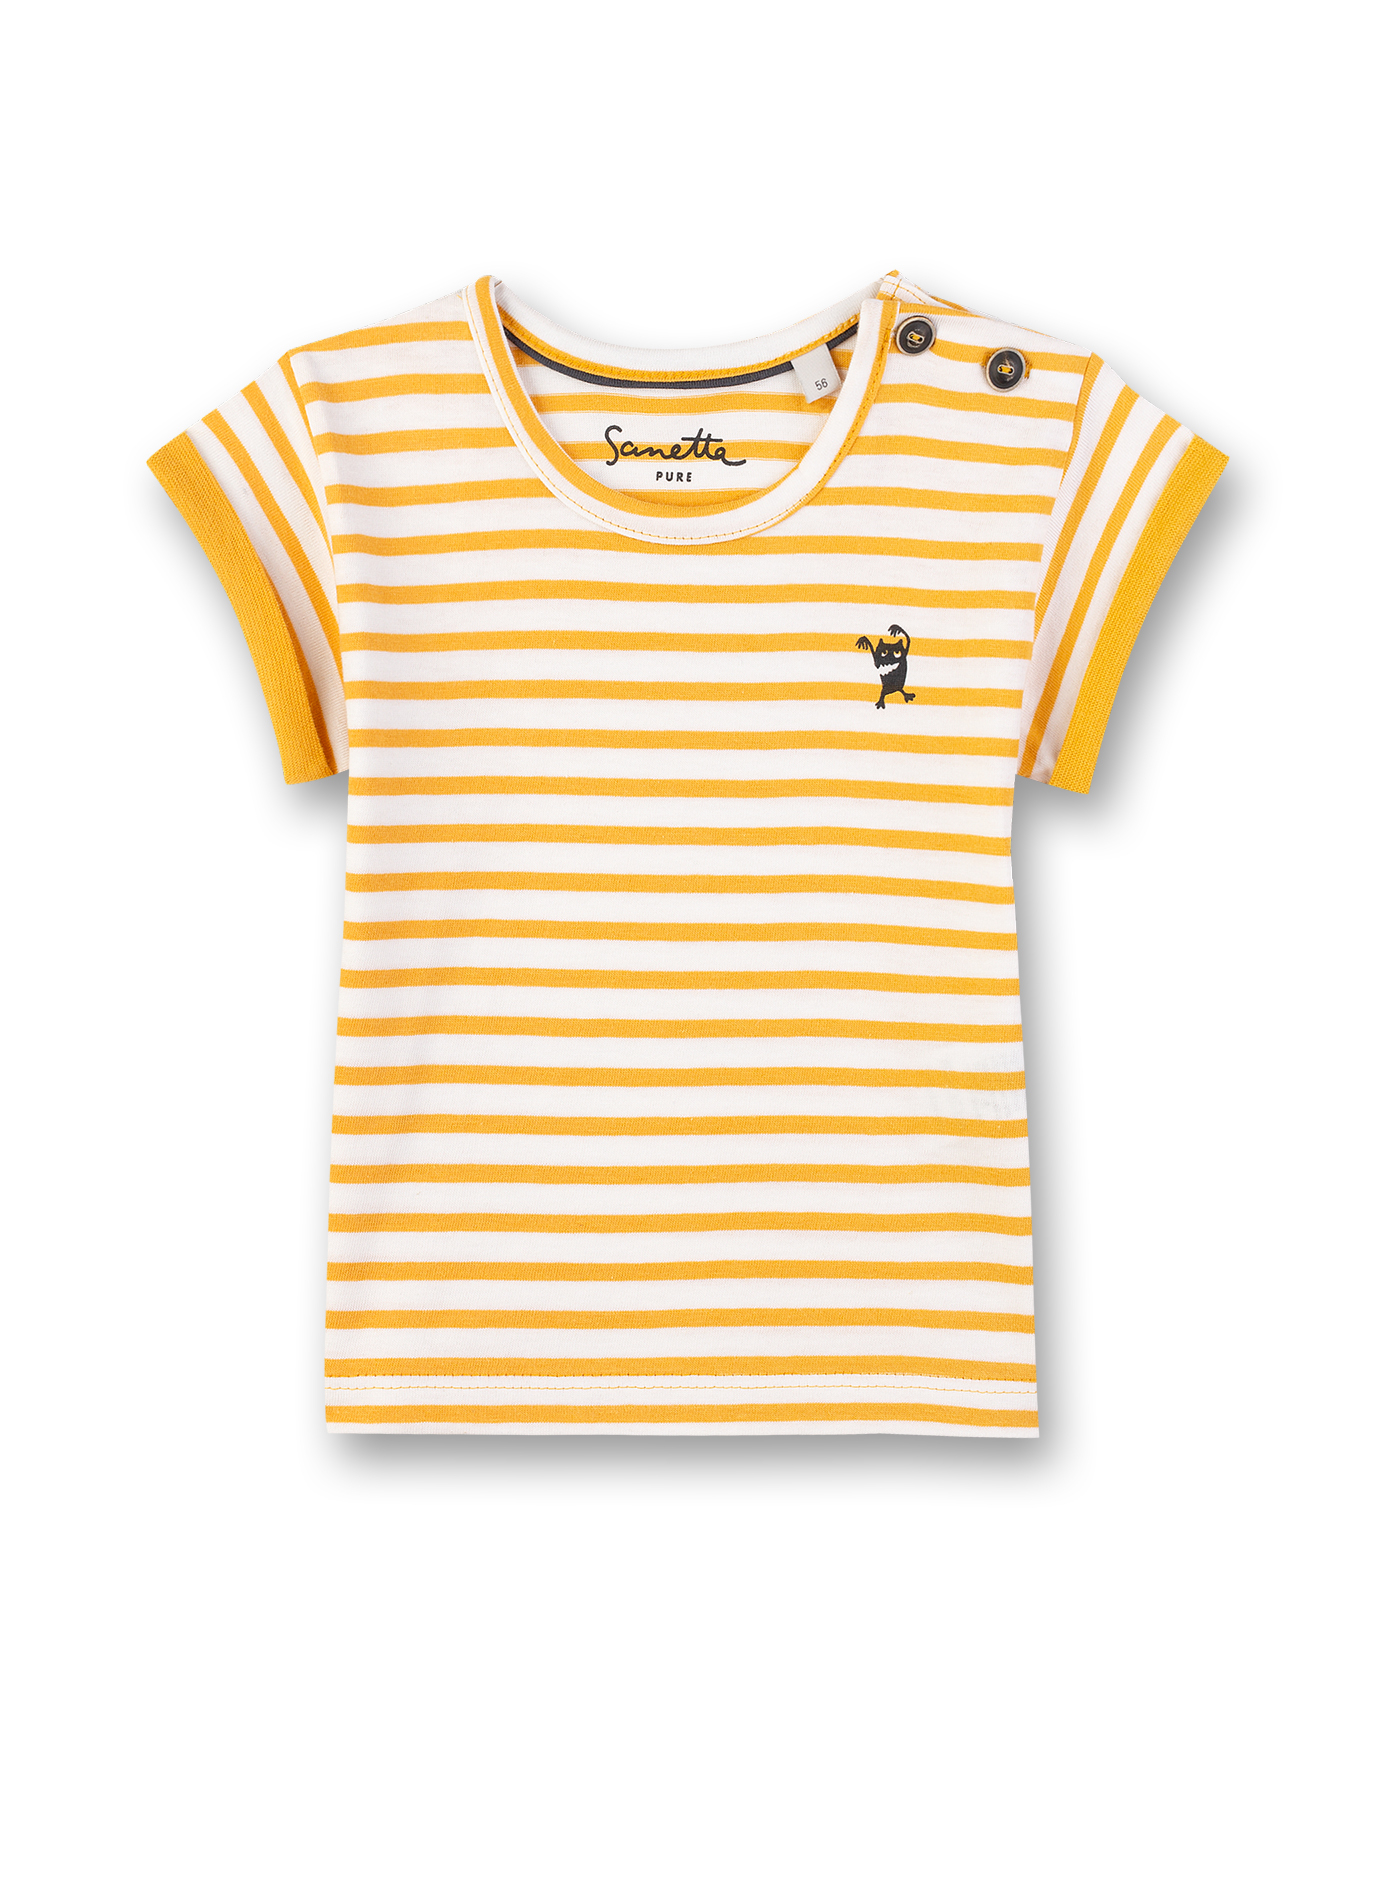 Unisex T-Shirt Gelb-geringelt